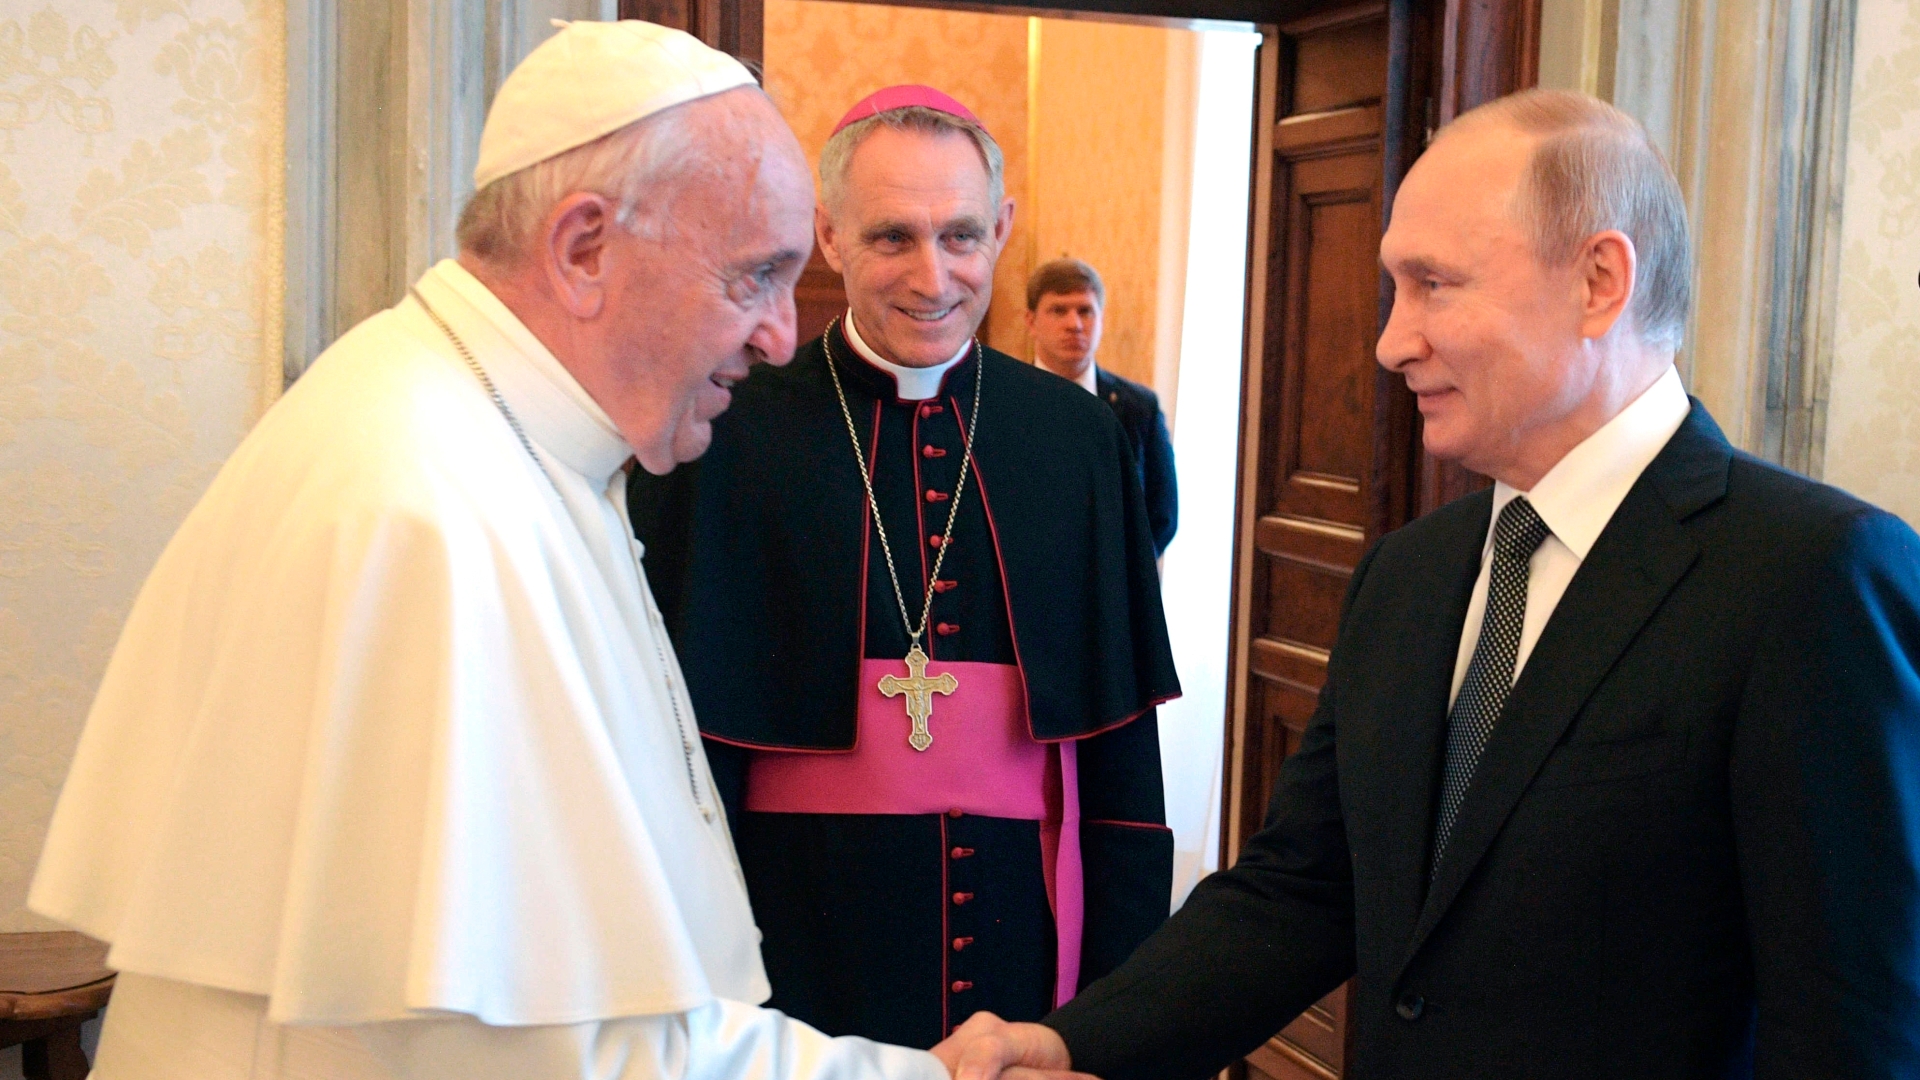 modbydeligt eksperimentel butiksindehaveren Putin meets with Pope Francis in shadow of Ukraine crisis - The Washington  Post